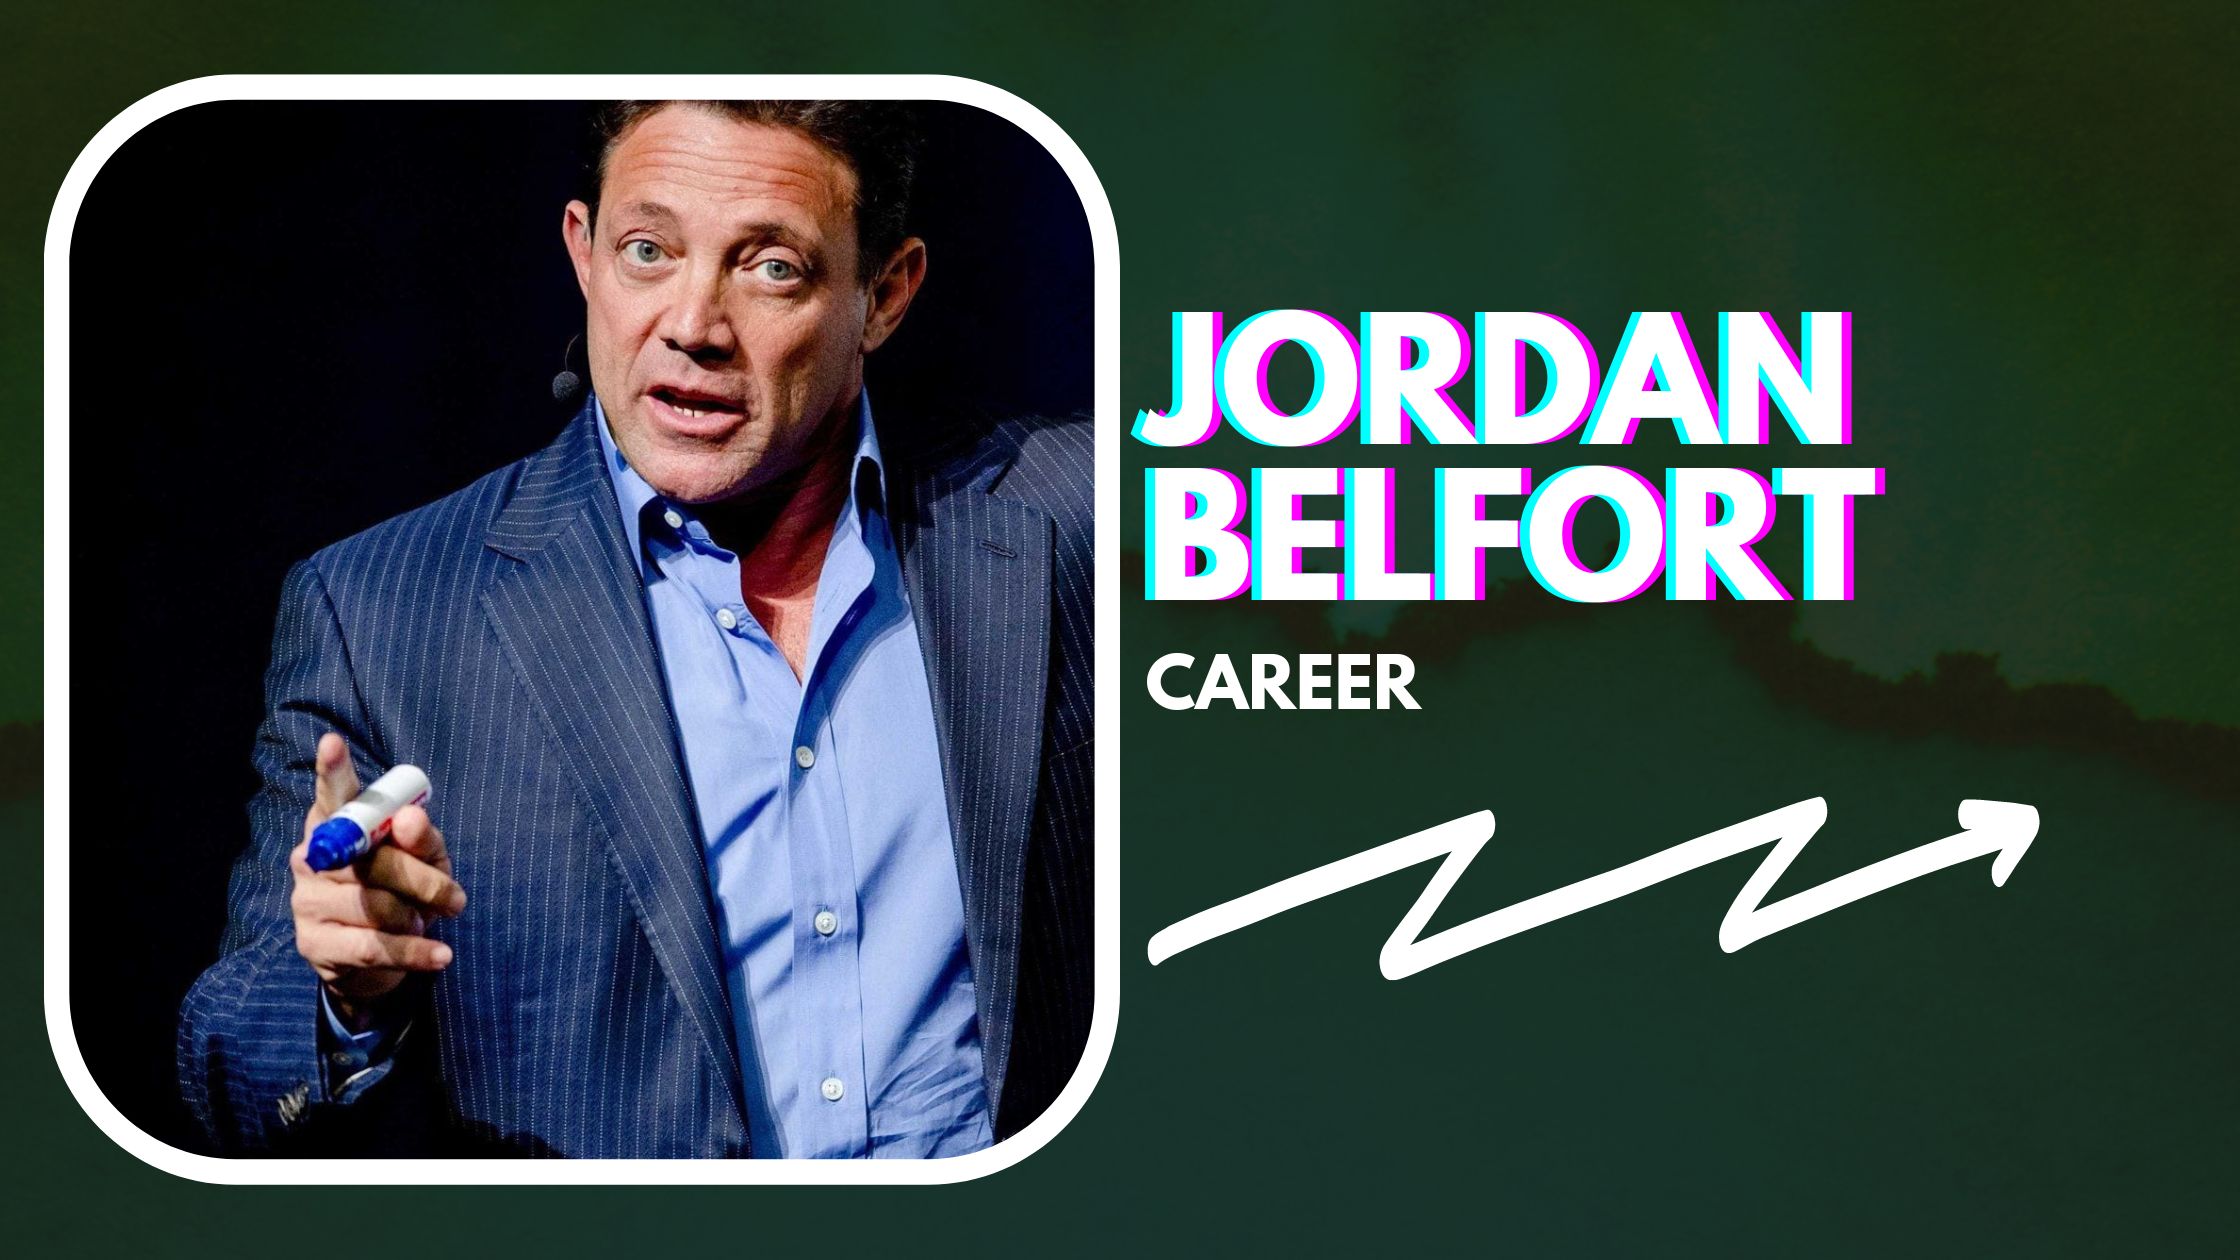 Jordan Belfort Net Worth And Biography